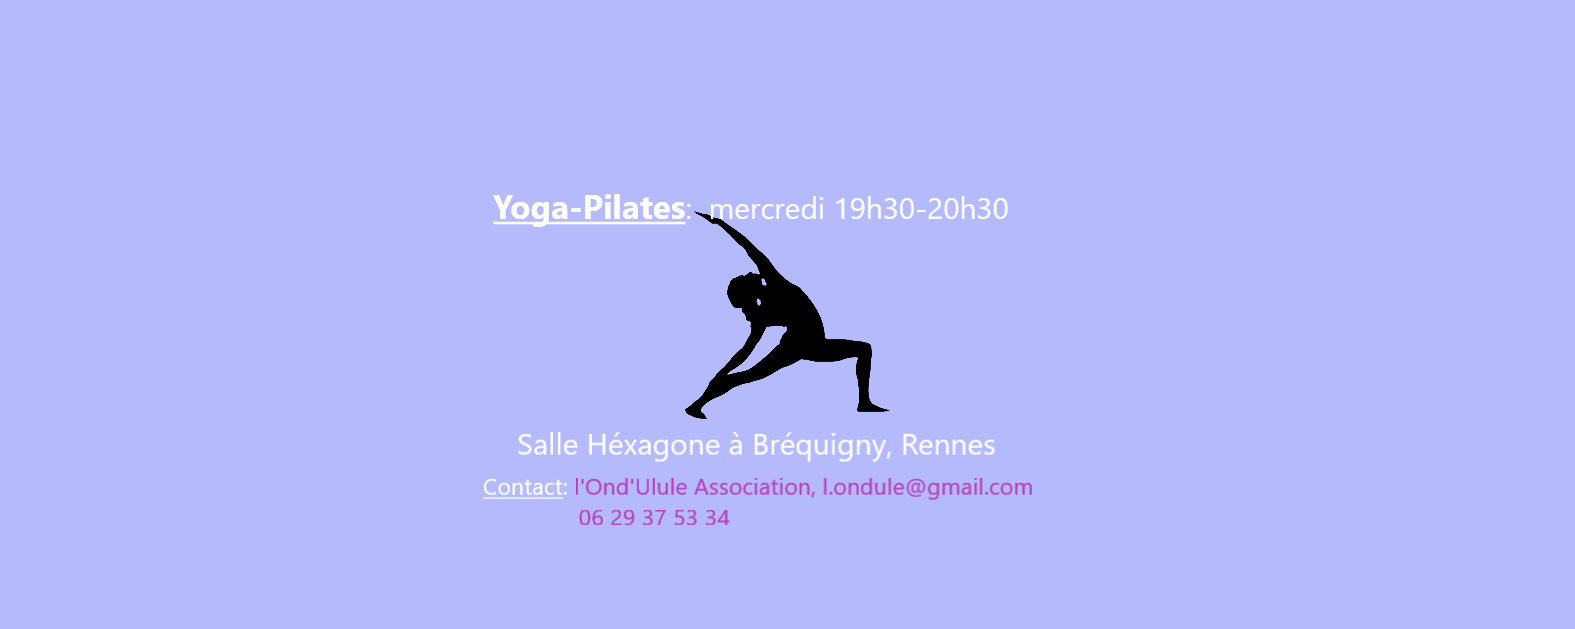 Yoga Pilates mercredi 19h30 à Rennes